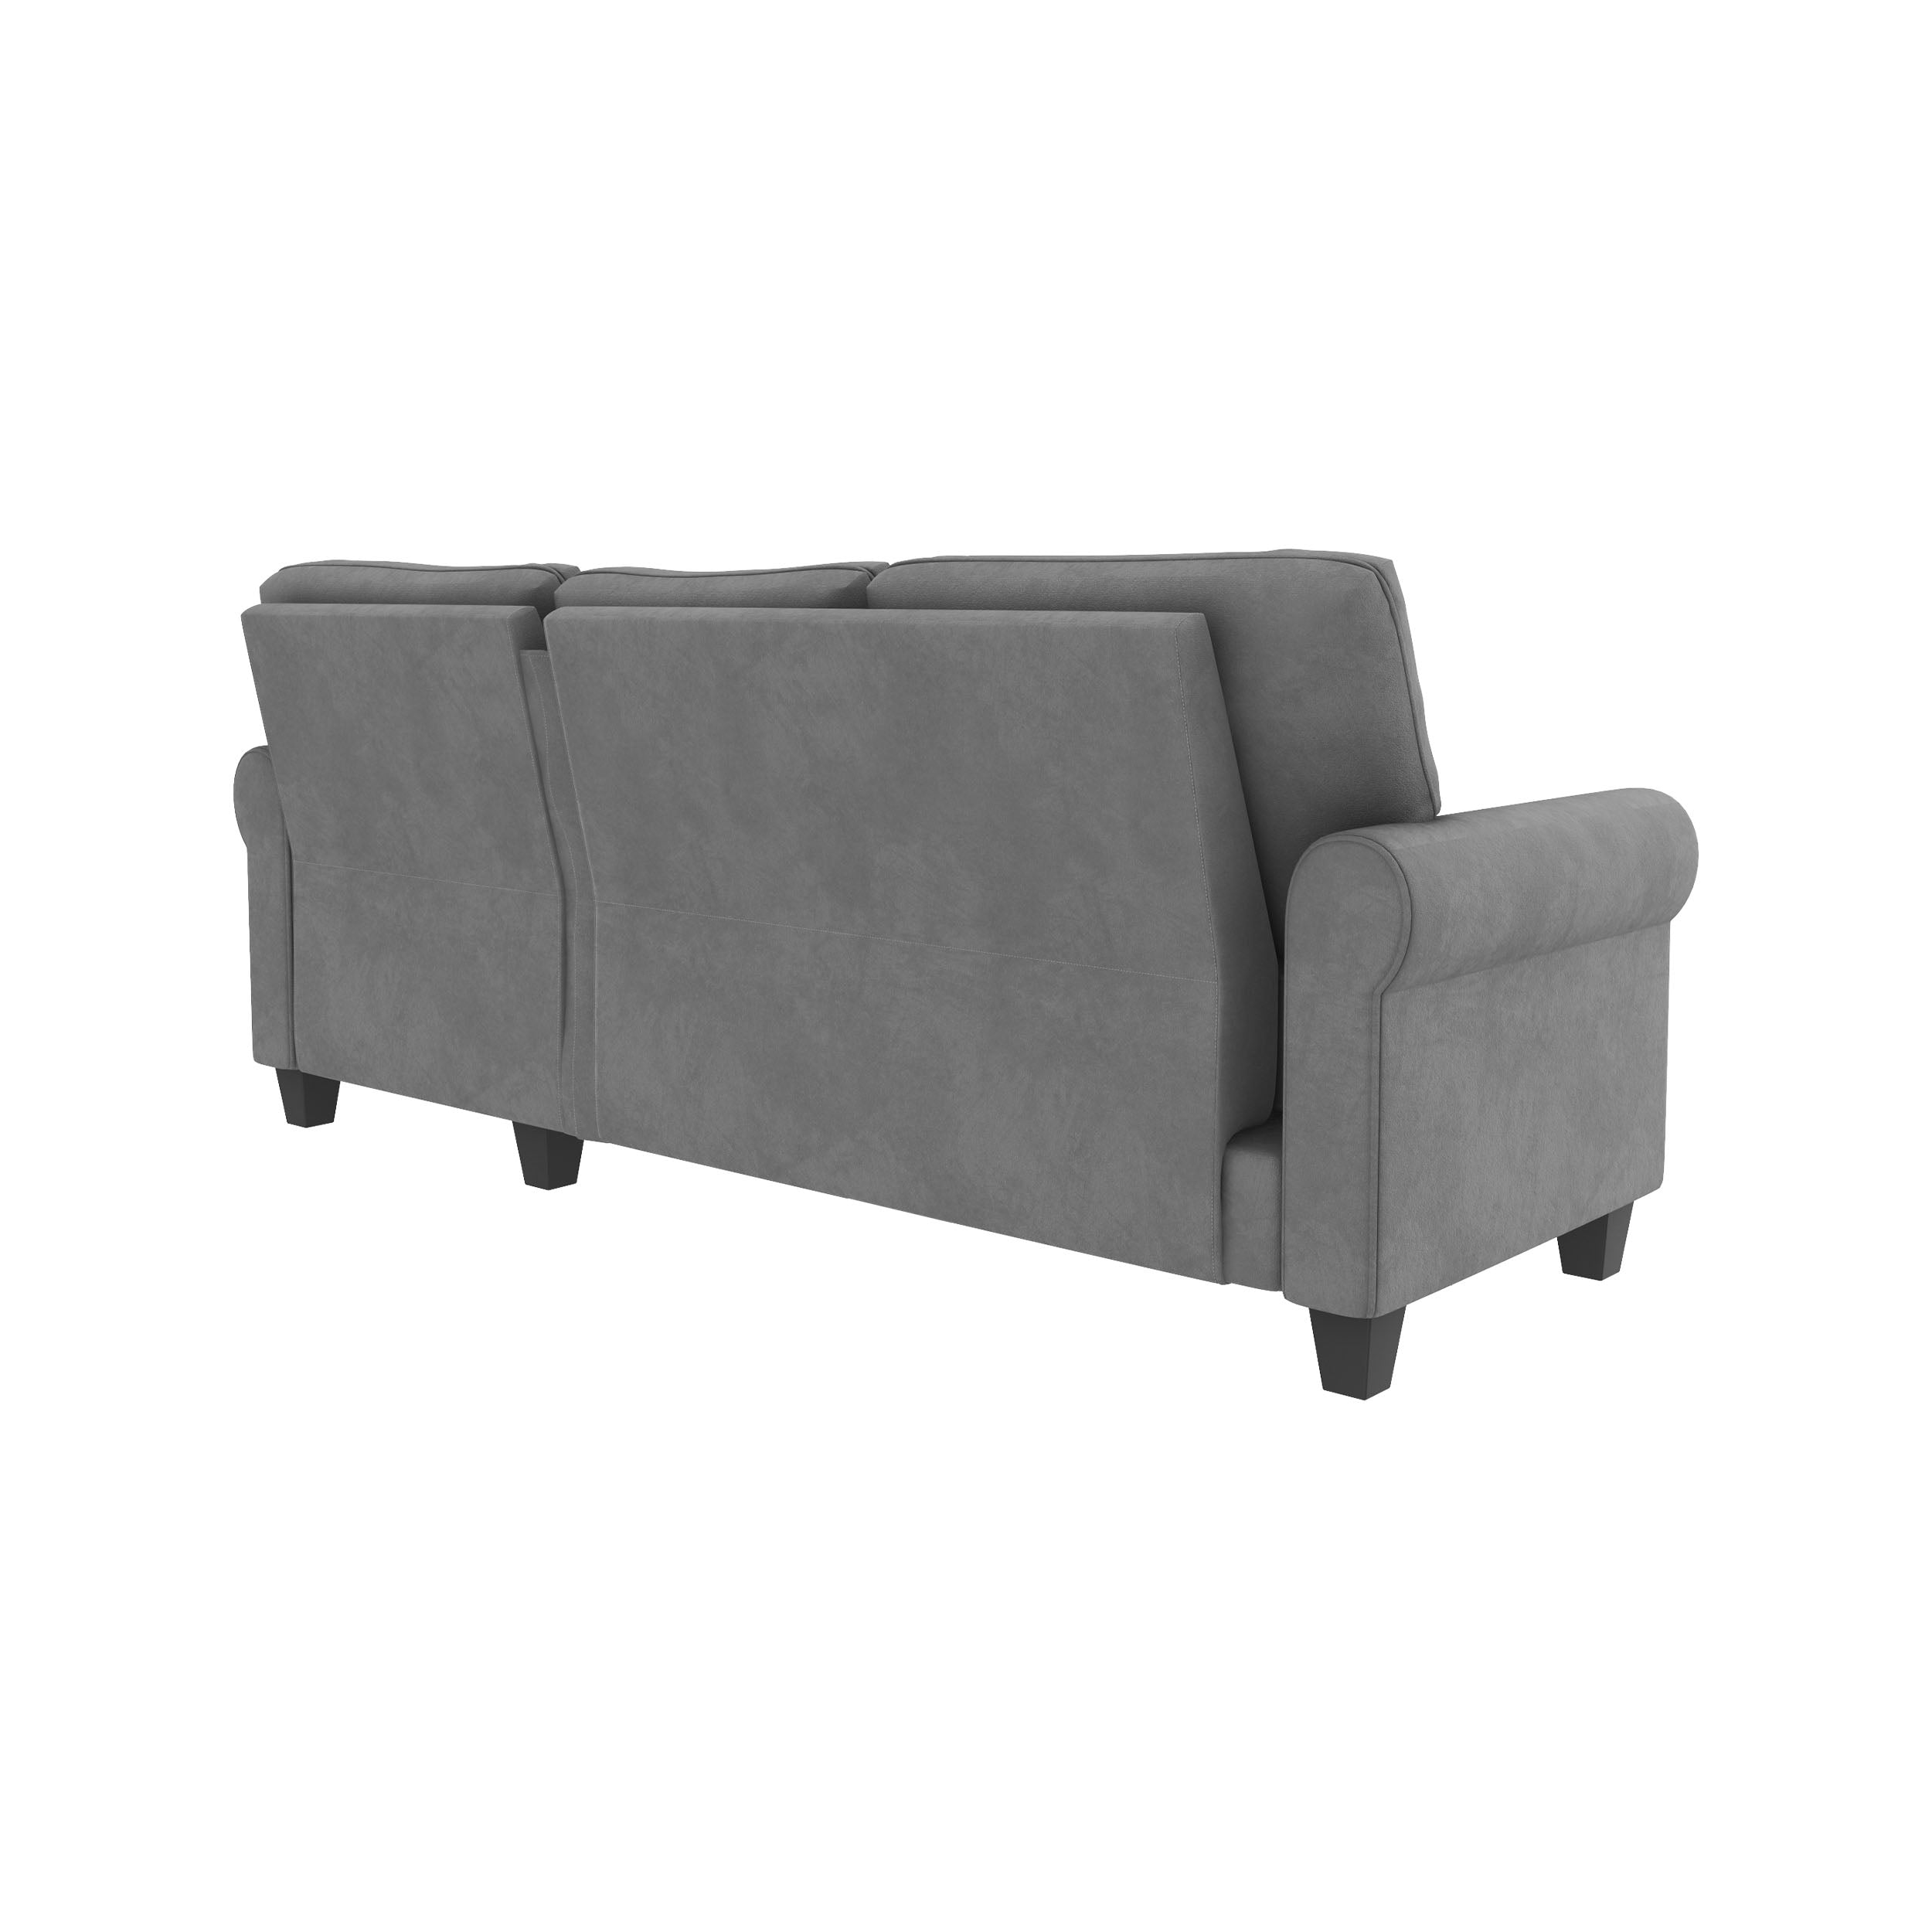 NOLANY Suede Fabric Luxury Combination Sofa